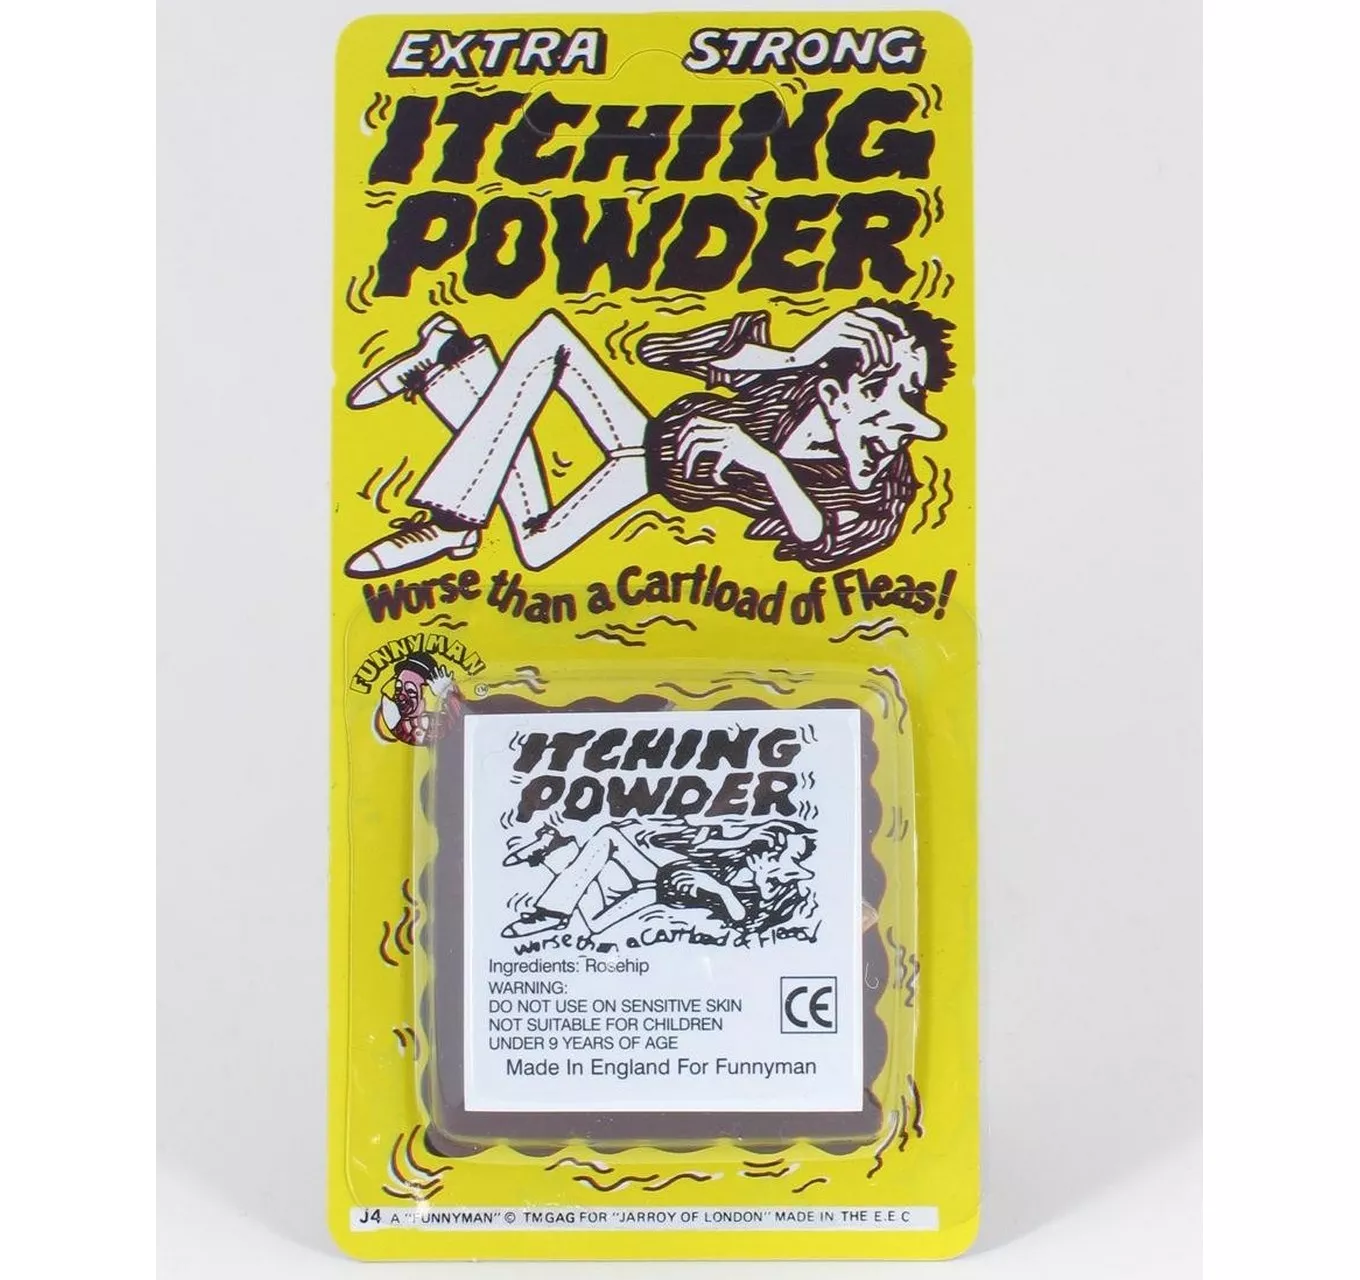 Itching Powder